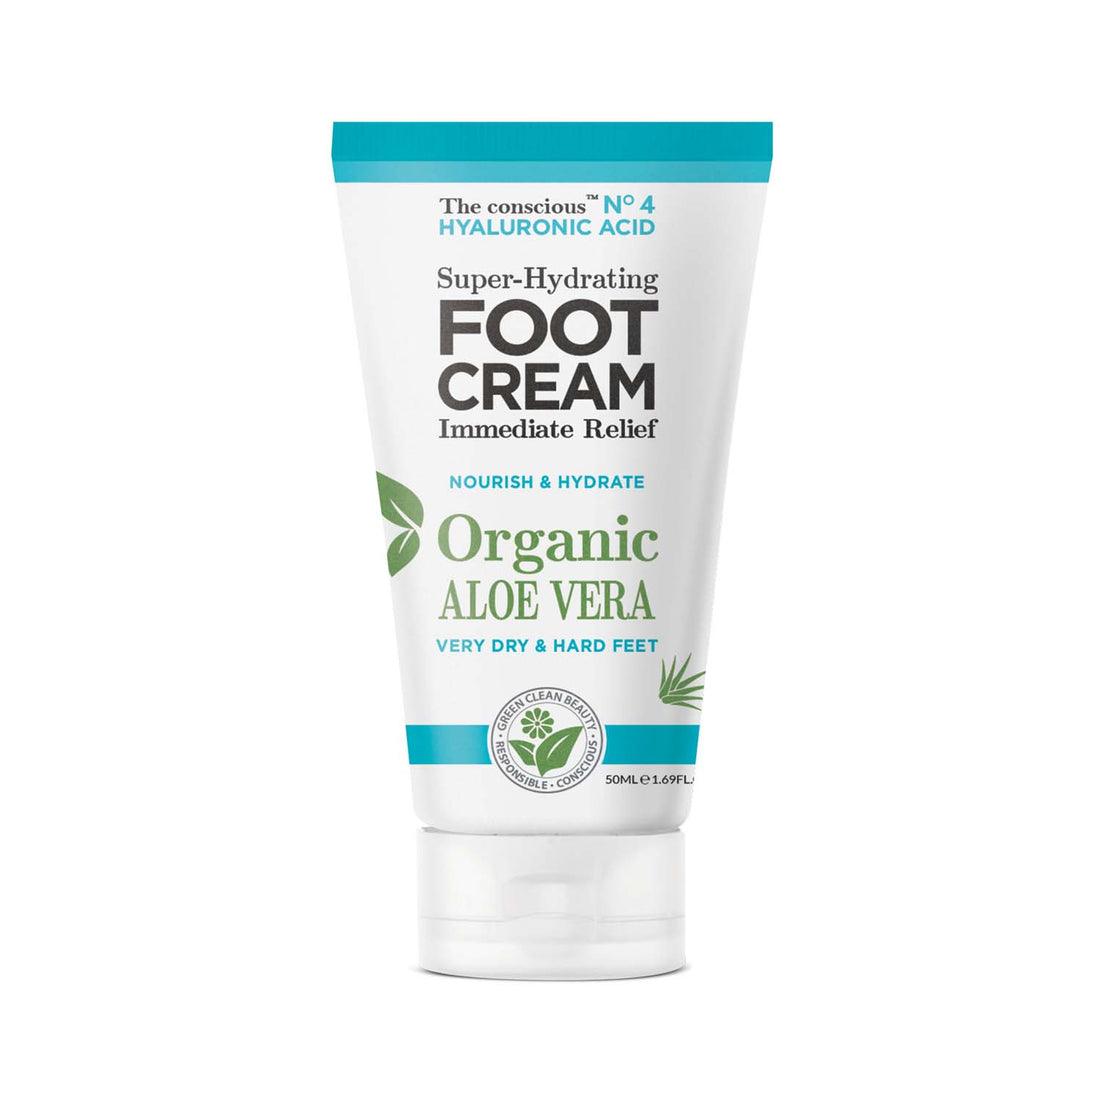 The conscious™ Hyaluronic Acid Super-Hydrating Foot Cream Organic Aloe Vera